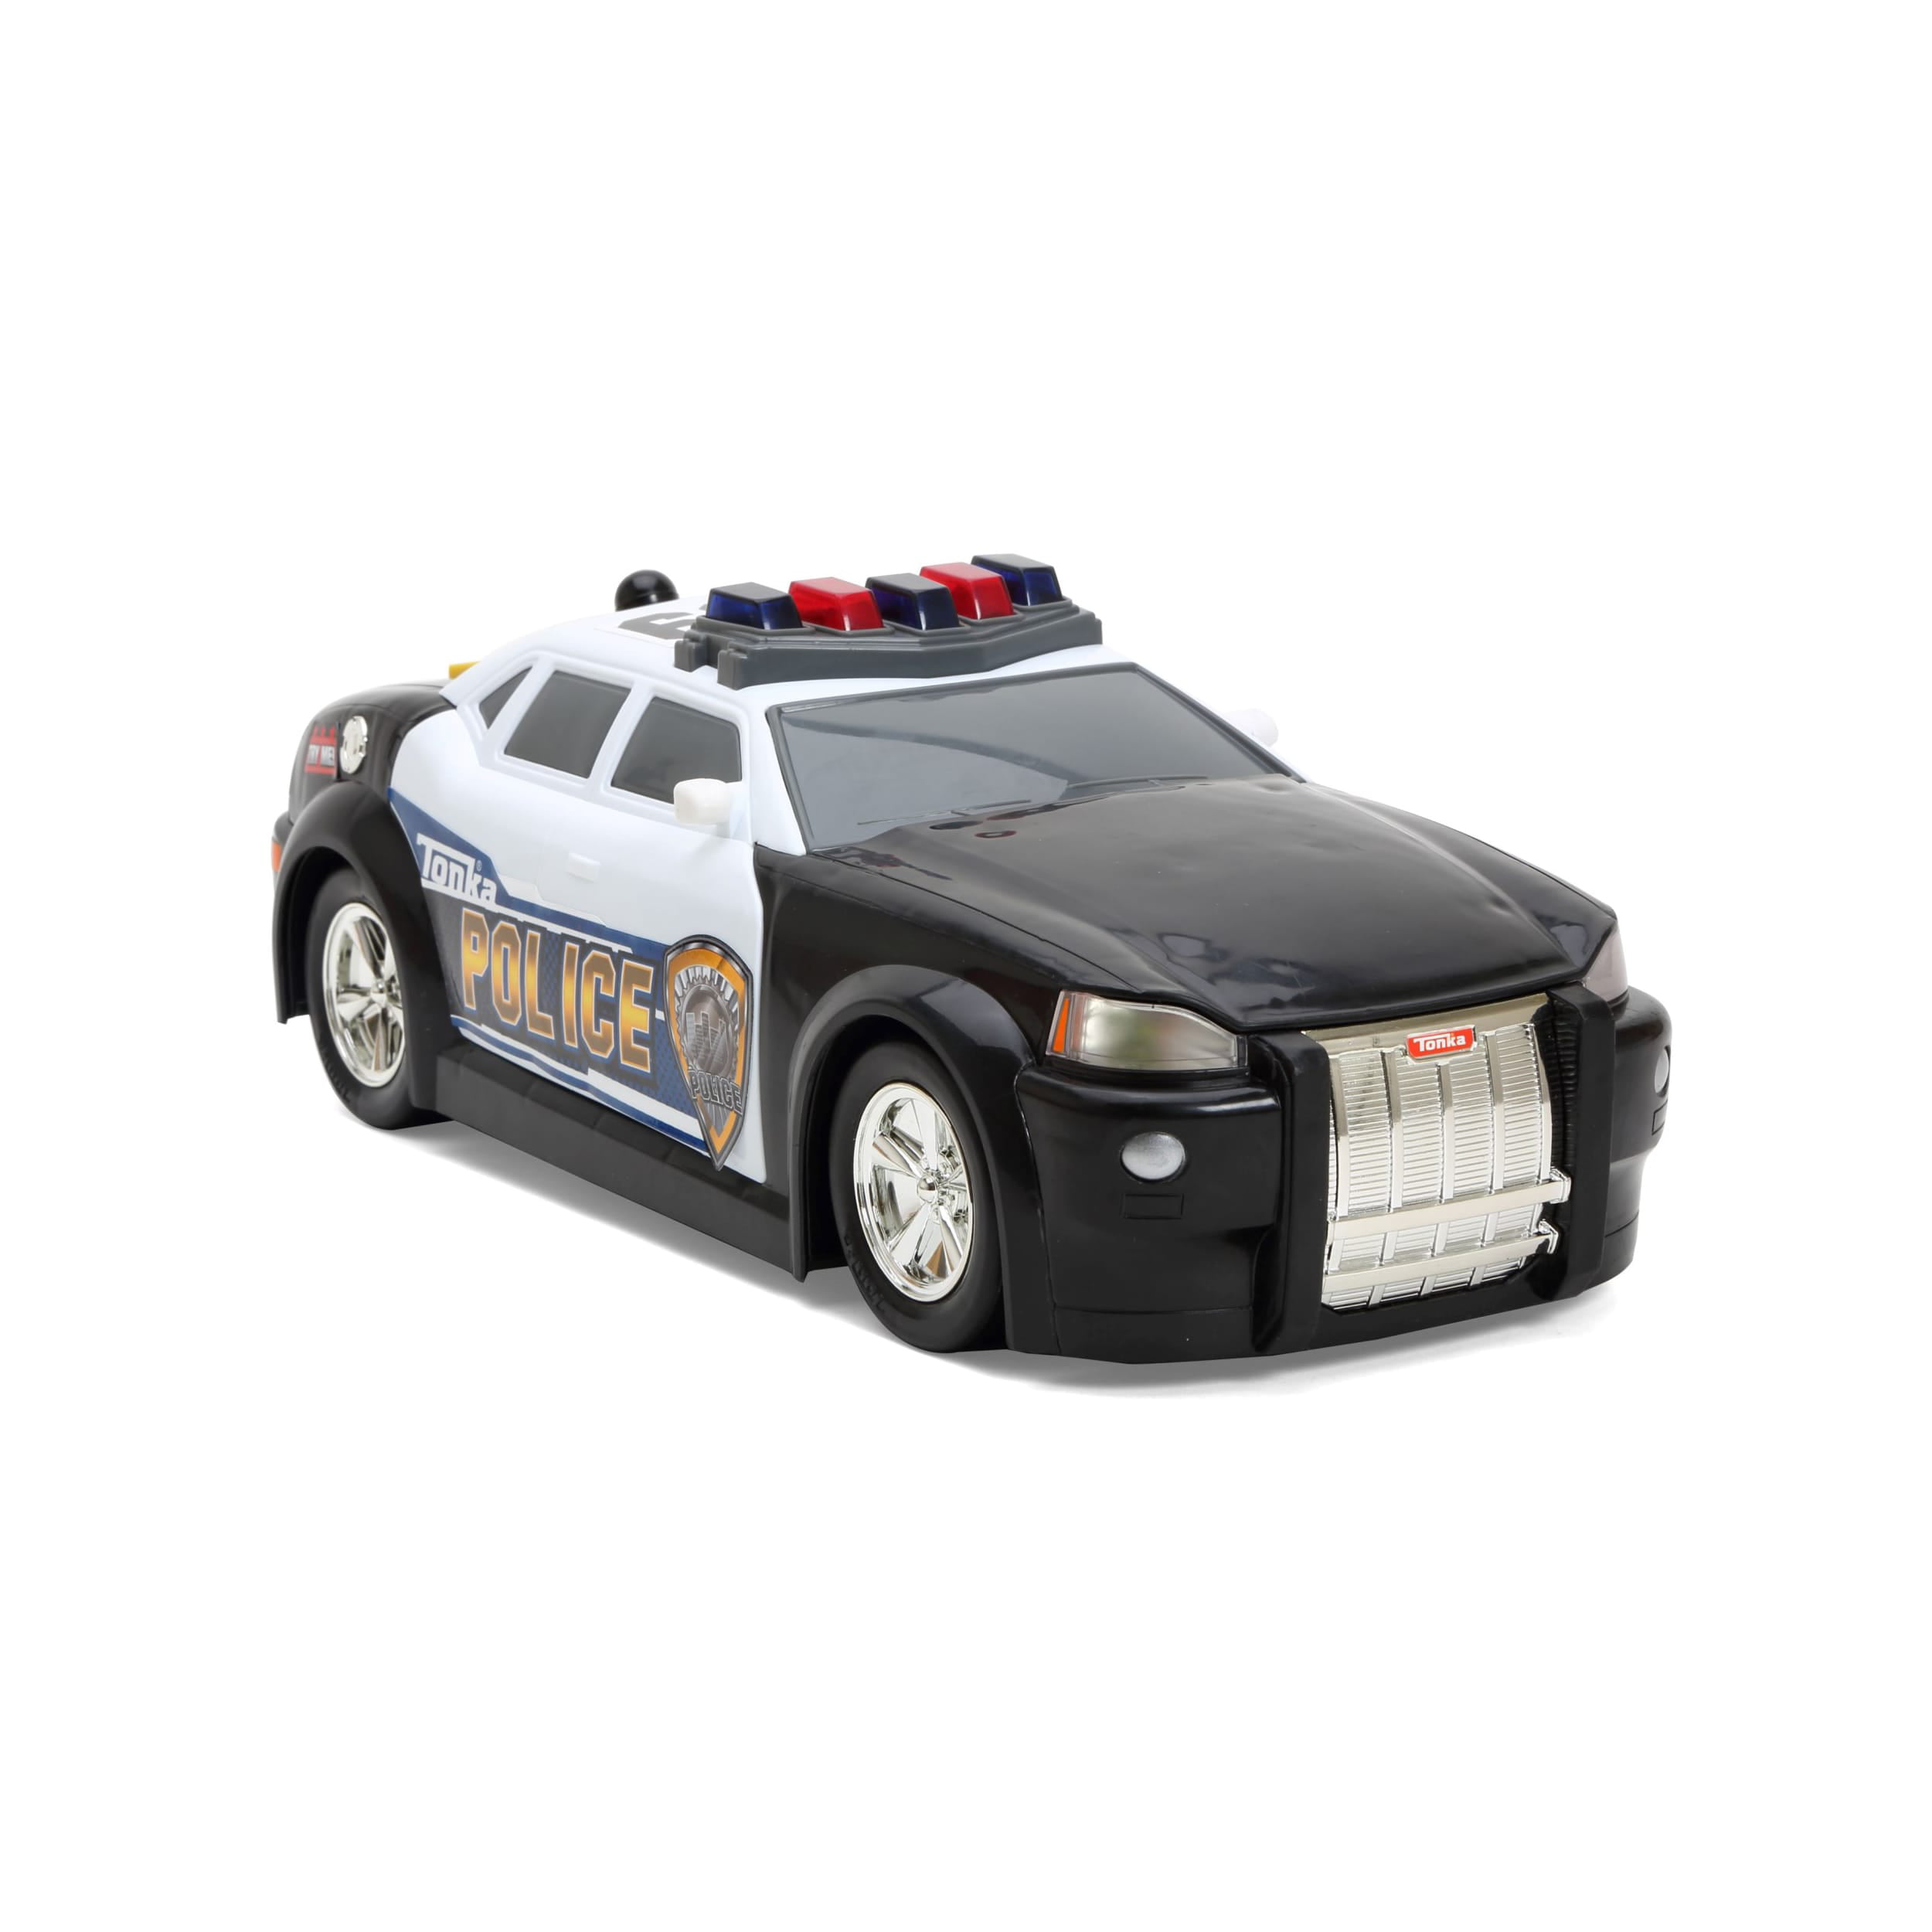 tonka toy police car